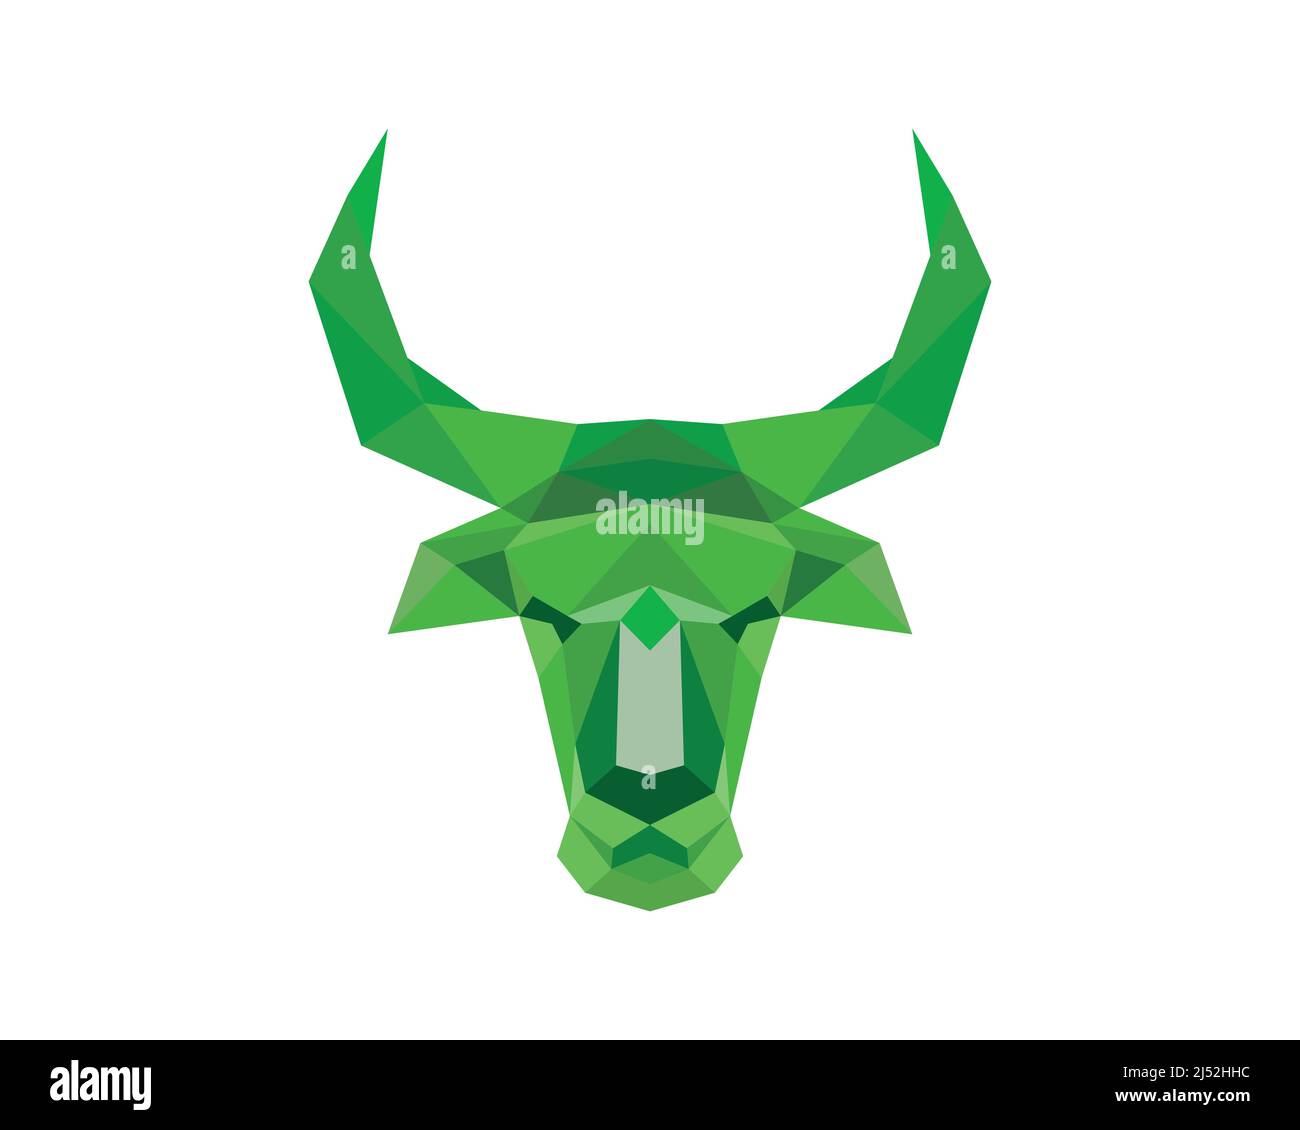 Calm Bull Head Polygonal Illustration Vector Stock Vector